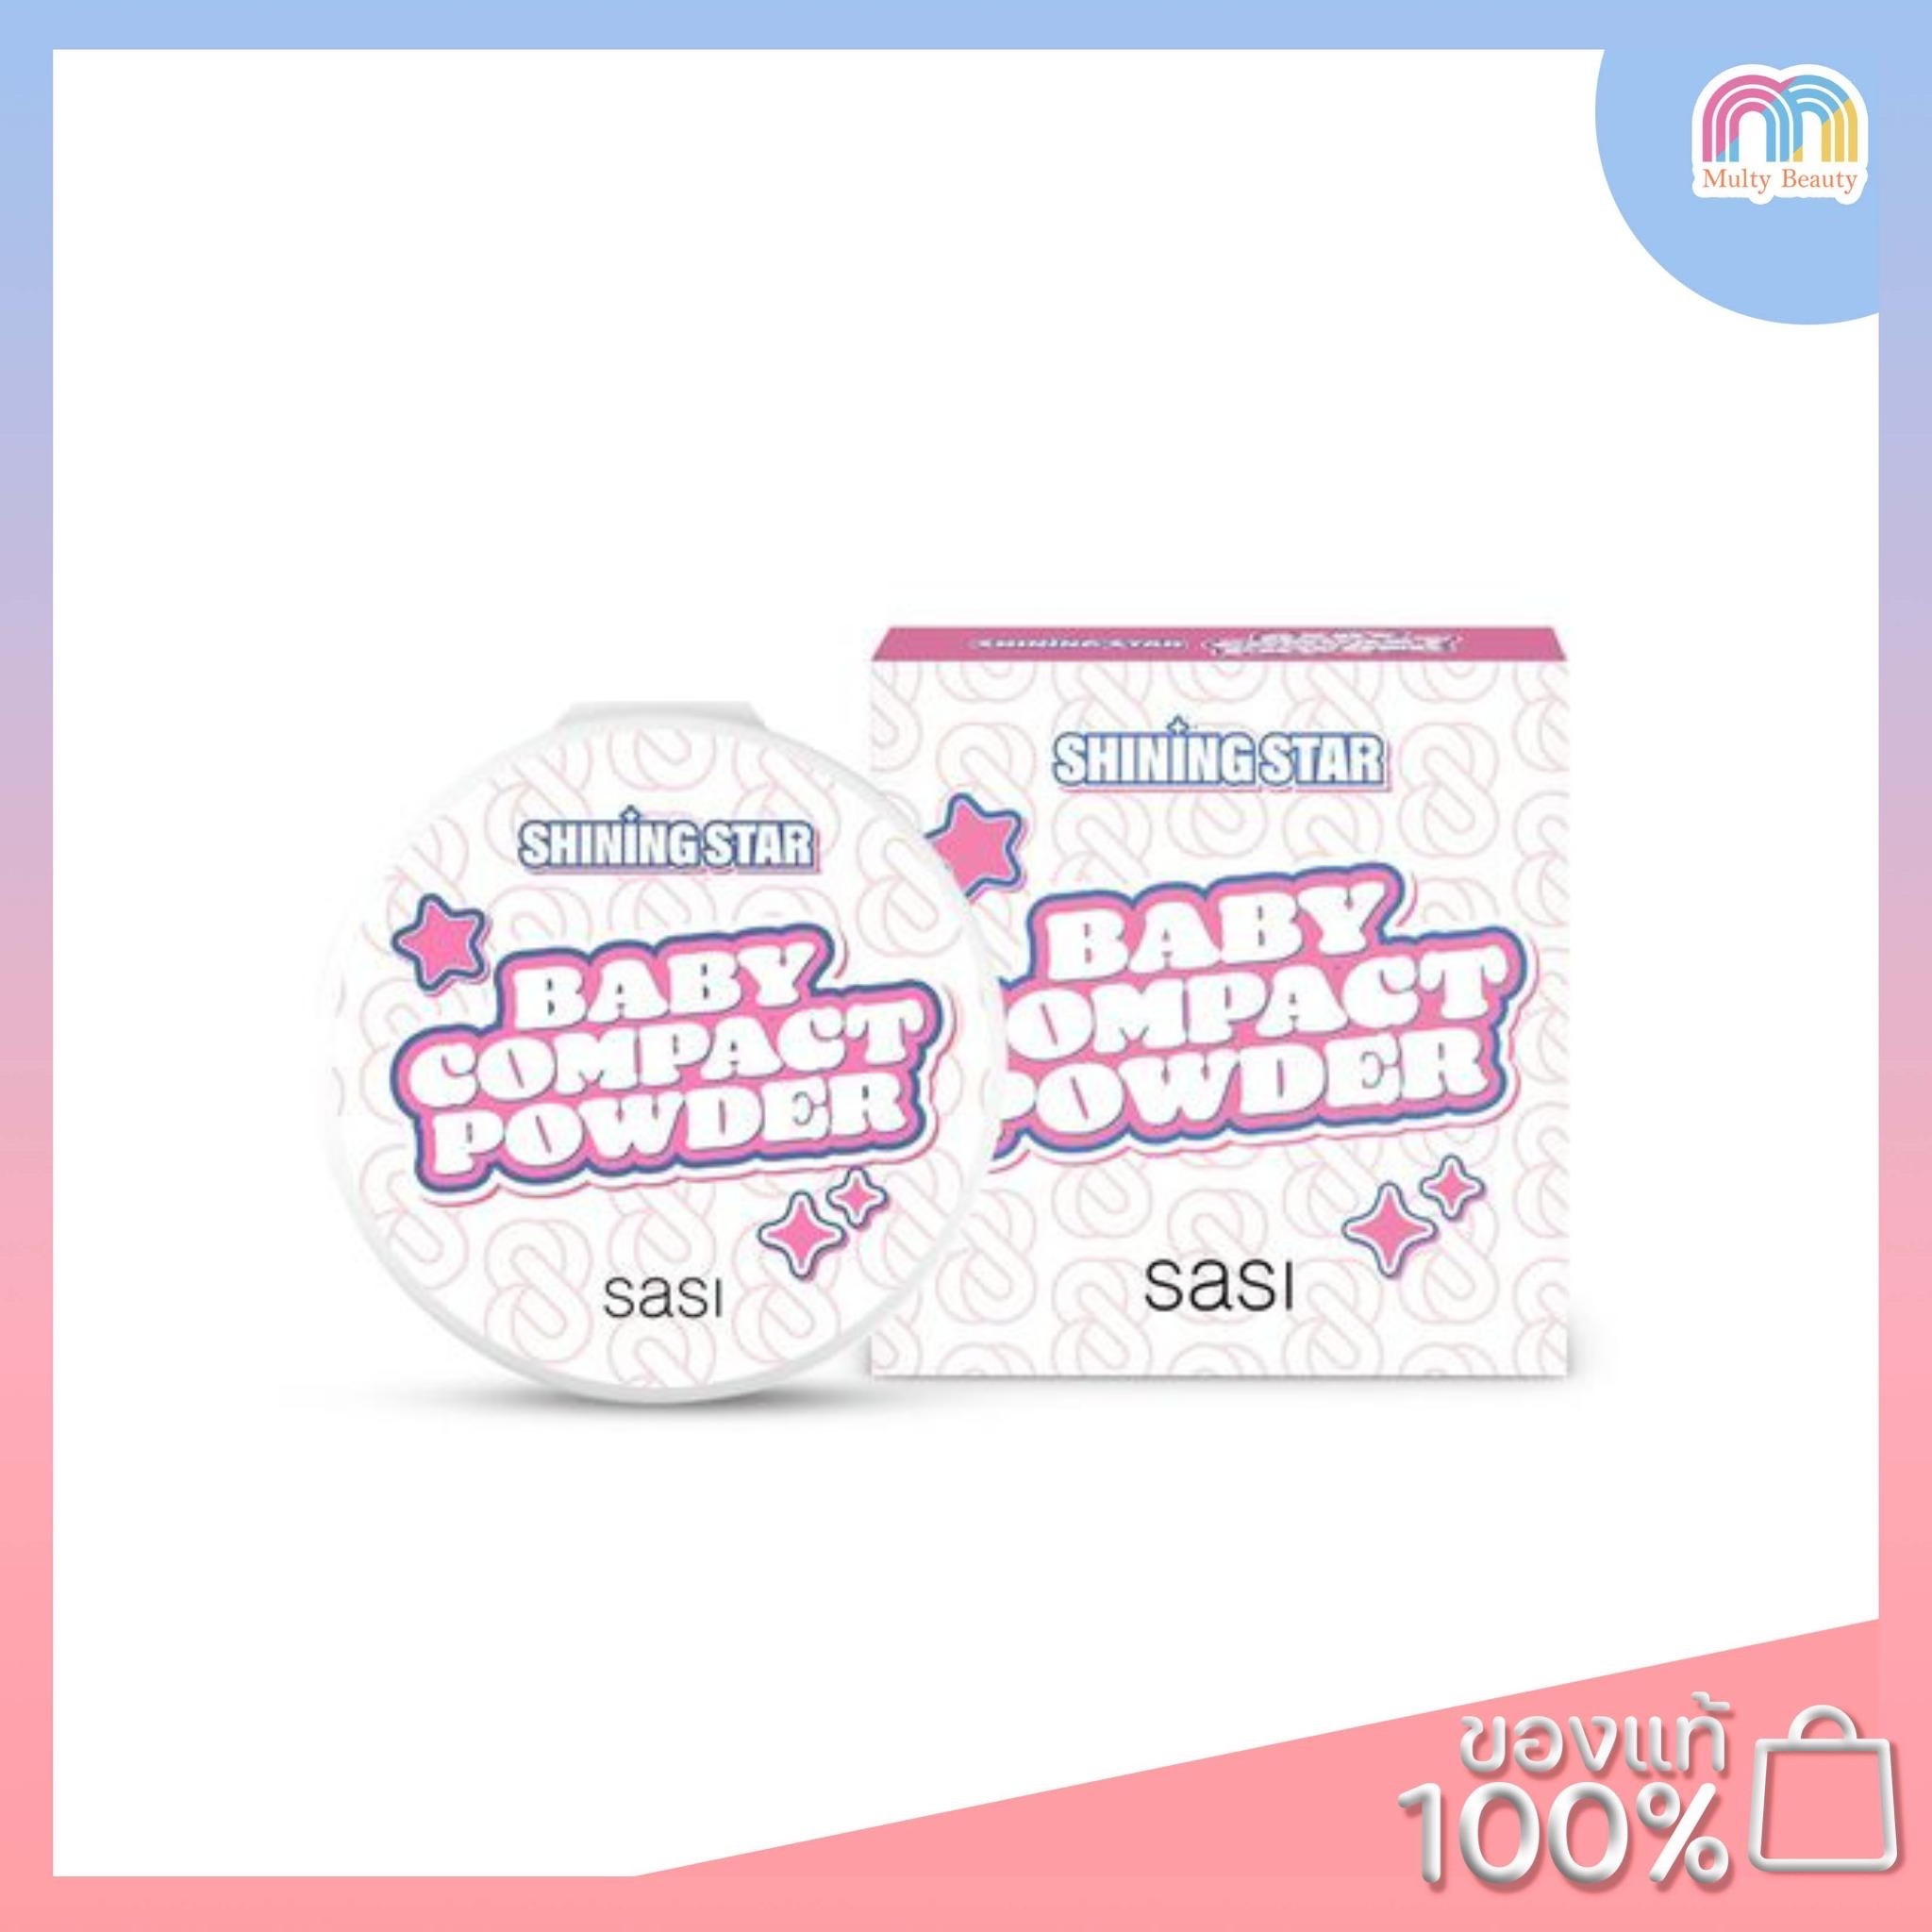 Sasi-Shining Star Baby Compact Powder
